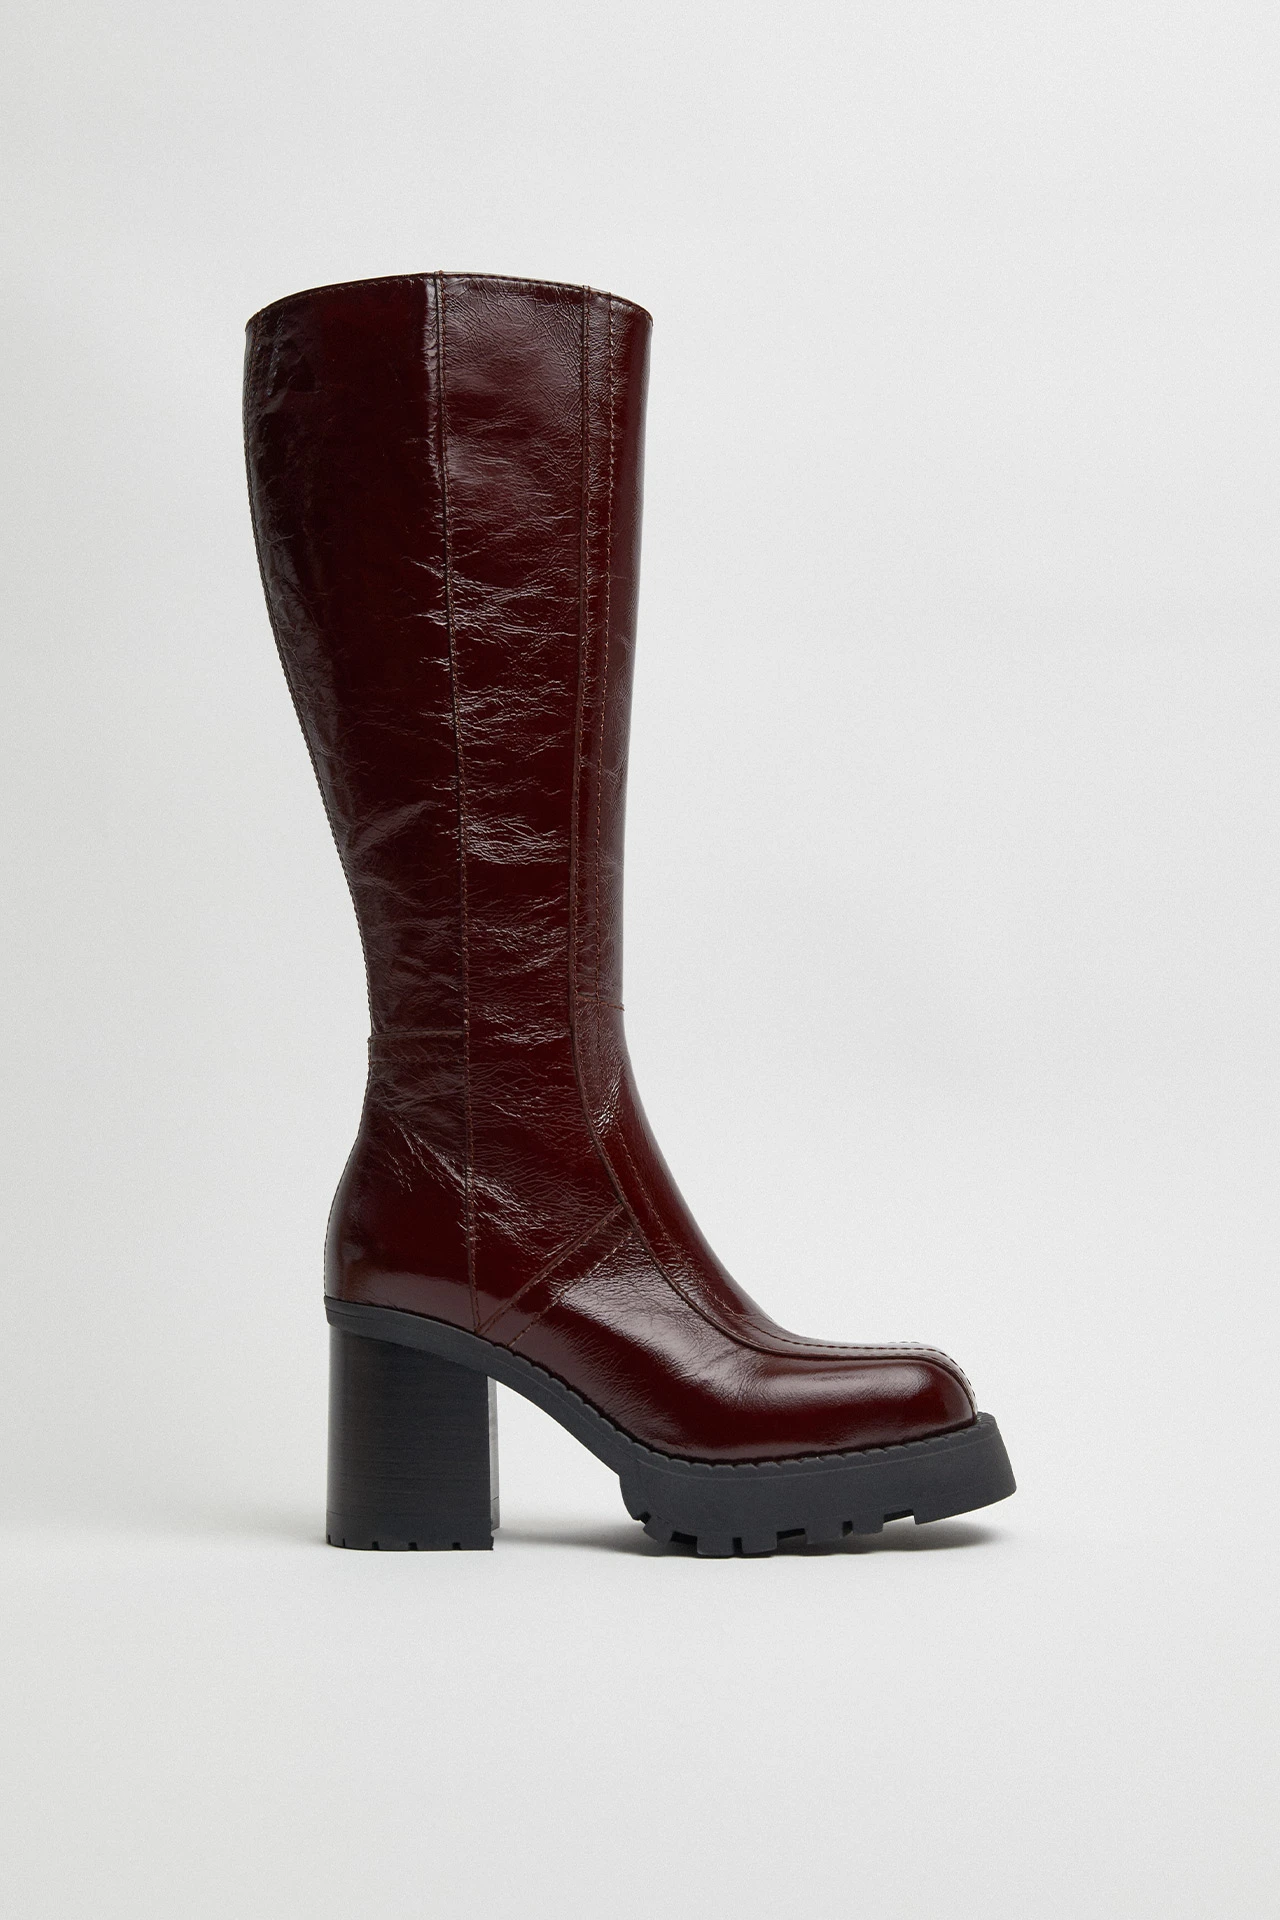 E8-dulce-burgundy-tall-boots-01